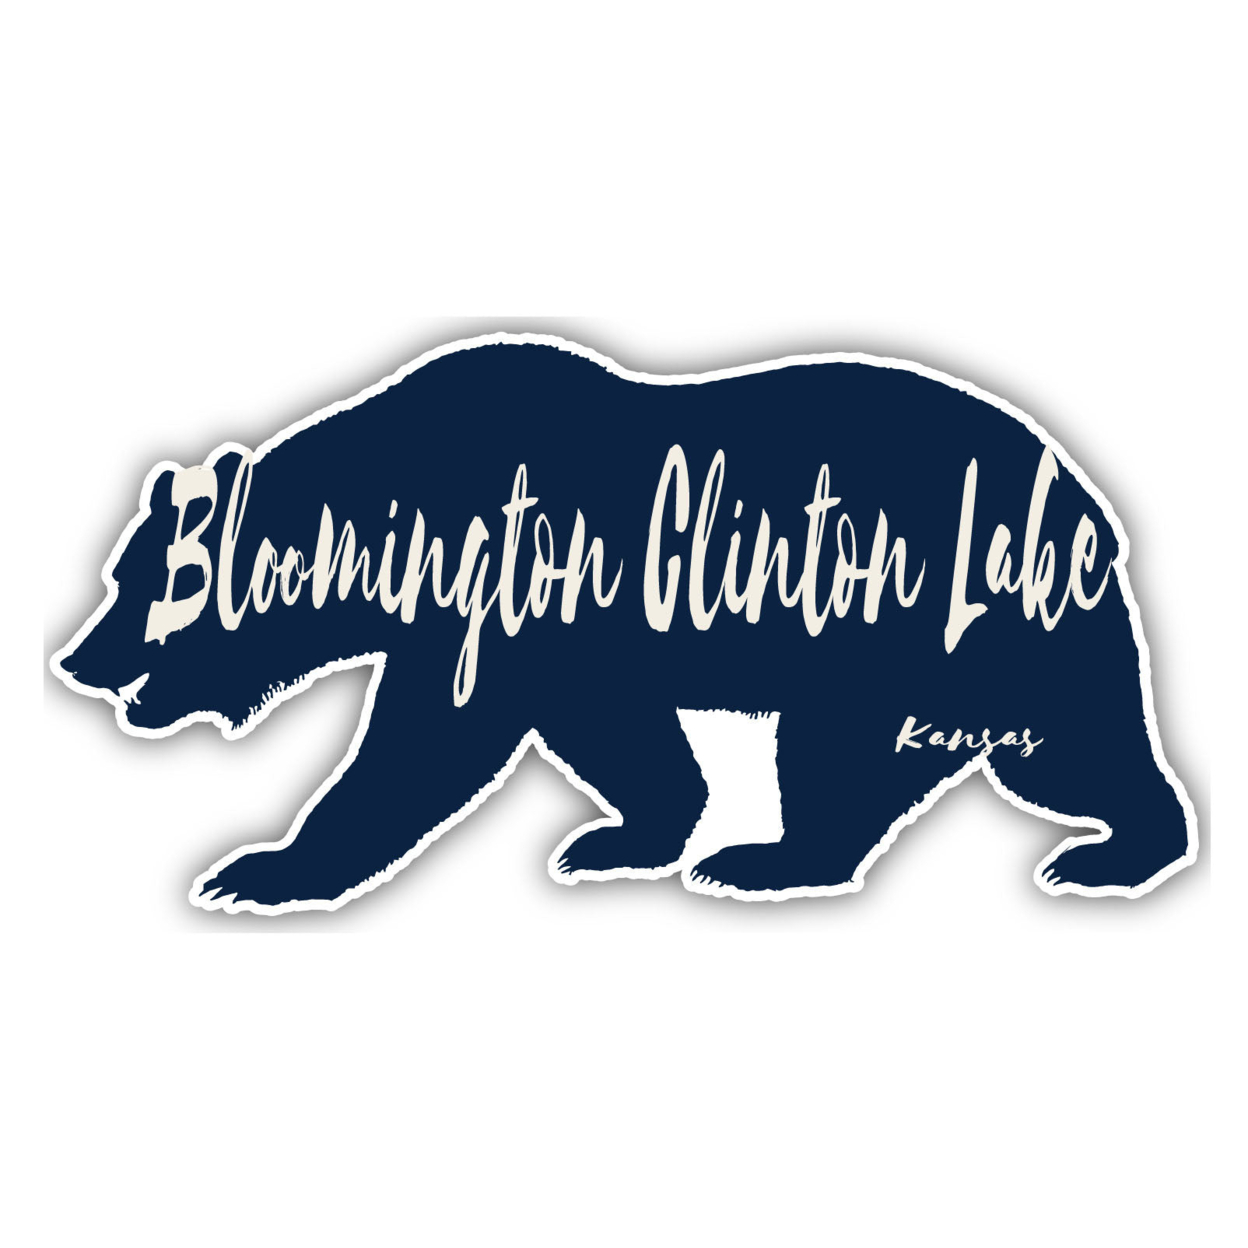 Bloomington Clinton Lake Kansas Souvenir Decorative Stickers (Choose Theme And Size) - 4-Pack, 6-Inch, Bear